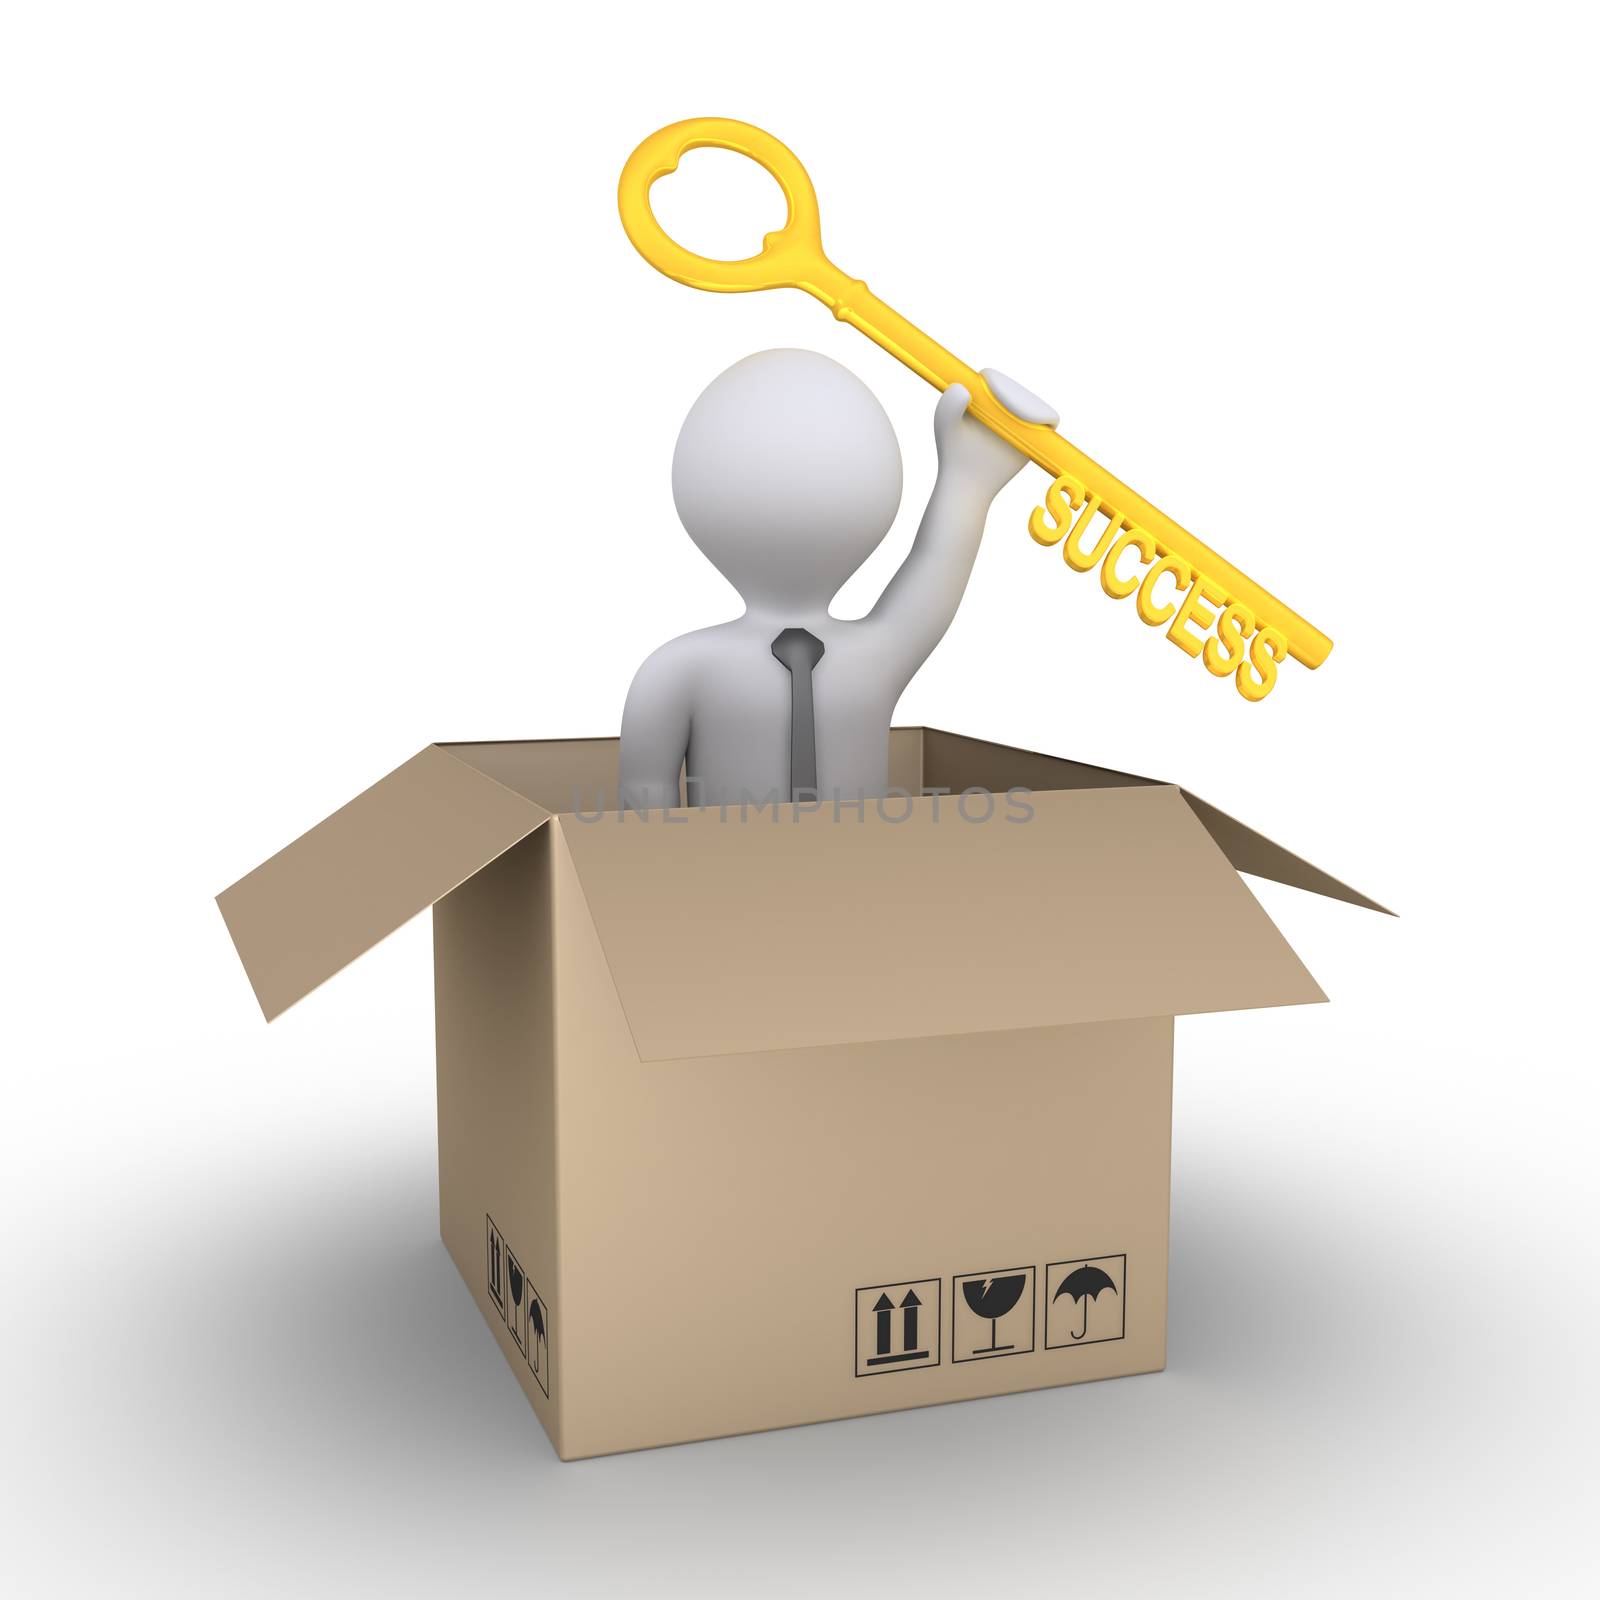 Businessman inside a carton box is holding a key of success